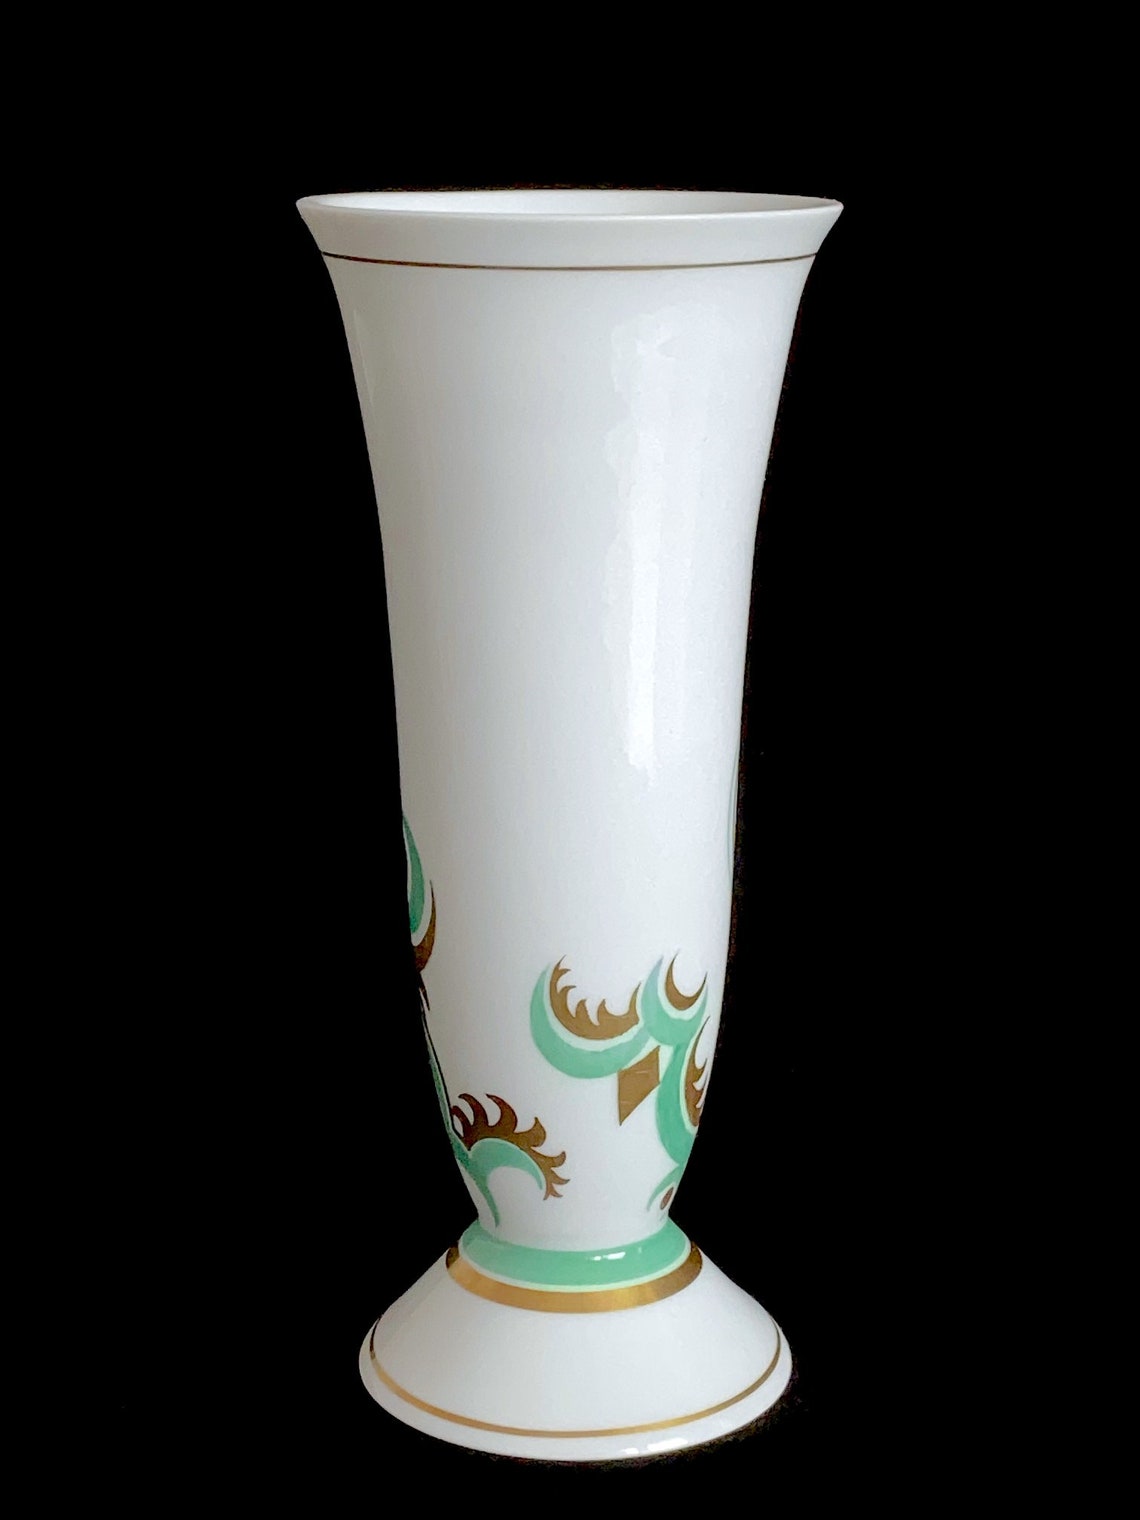 Vintage Rosenthal Vase With Modernist Designs in Green and | Etsy